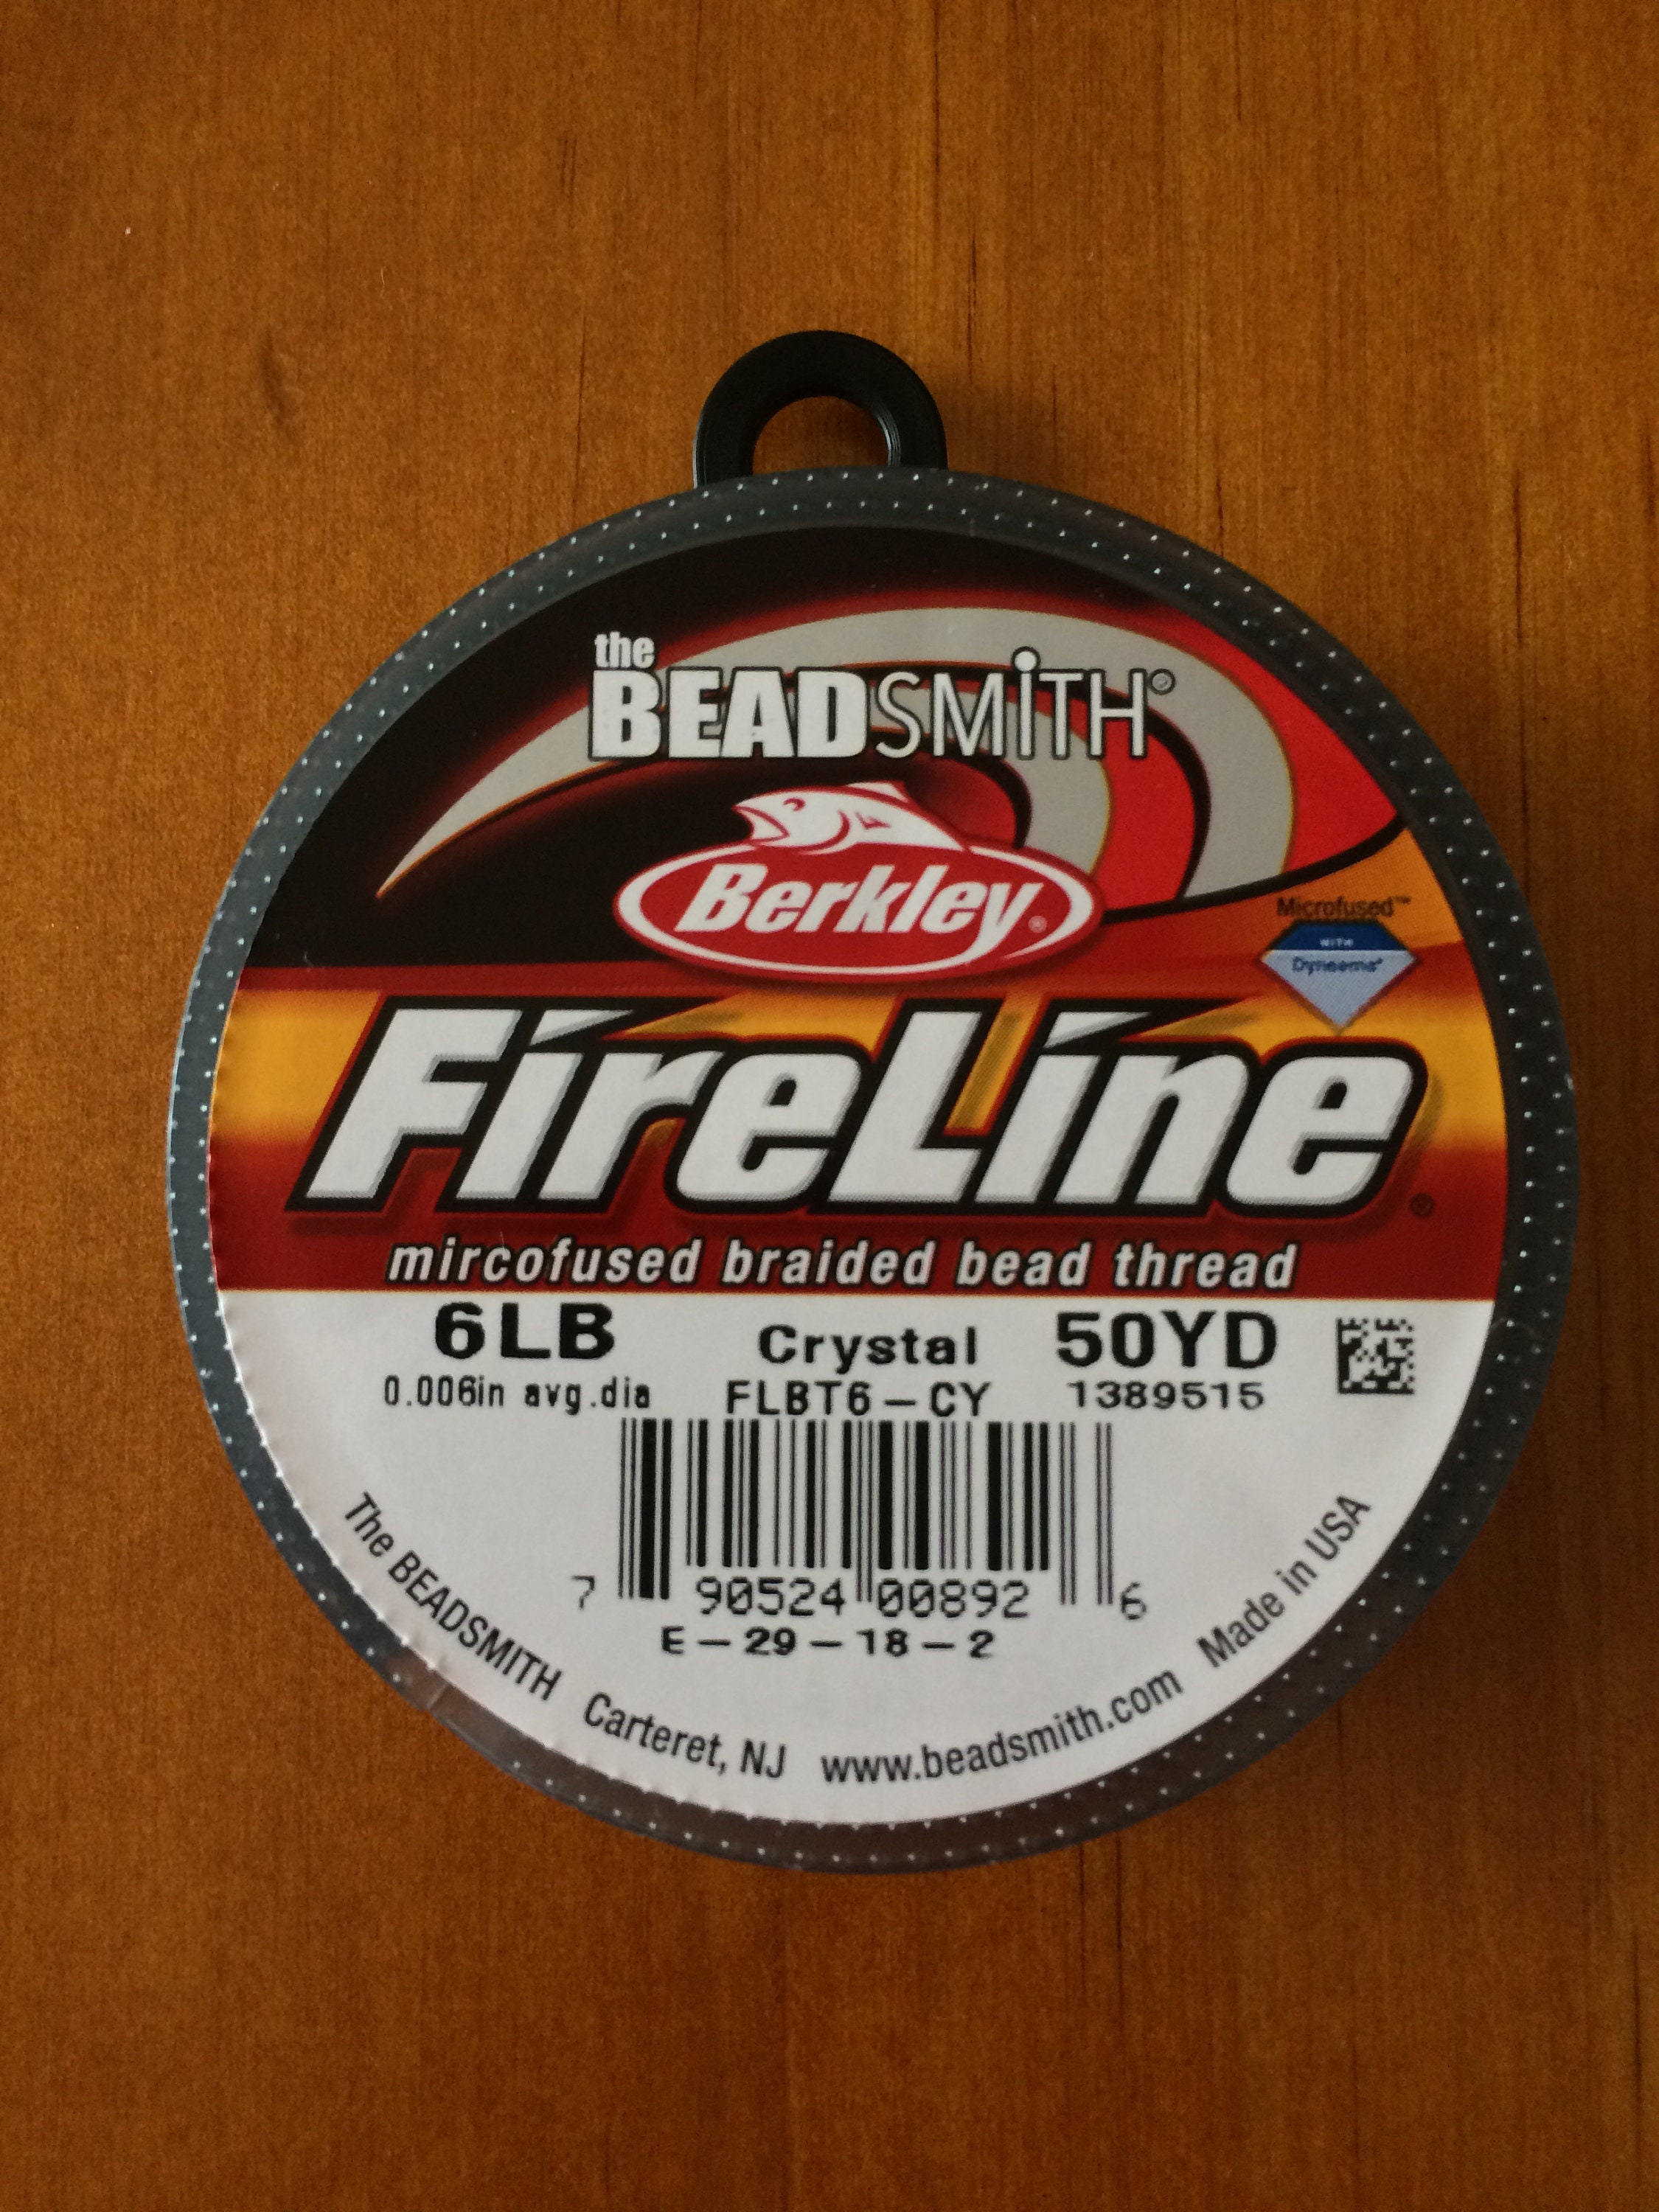 Fireline Black Satin 6Lb Beading Thread 125 yard Spool